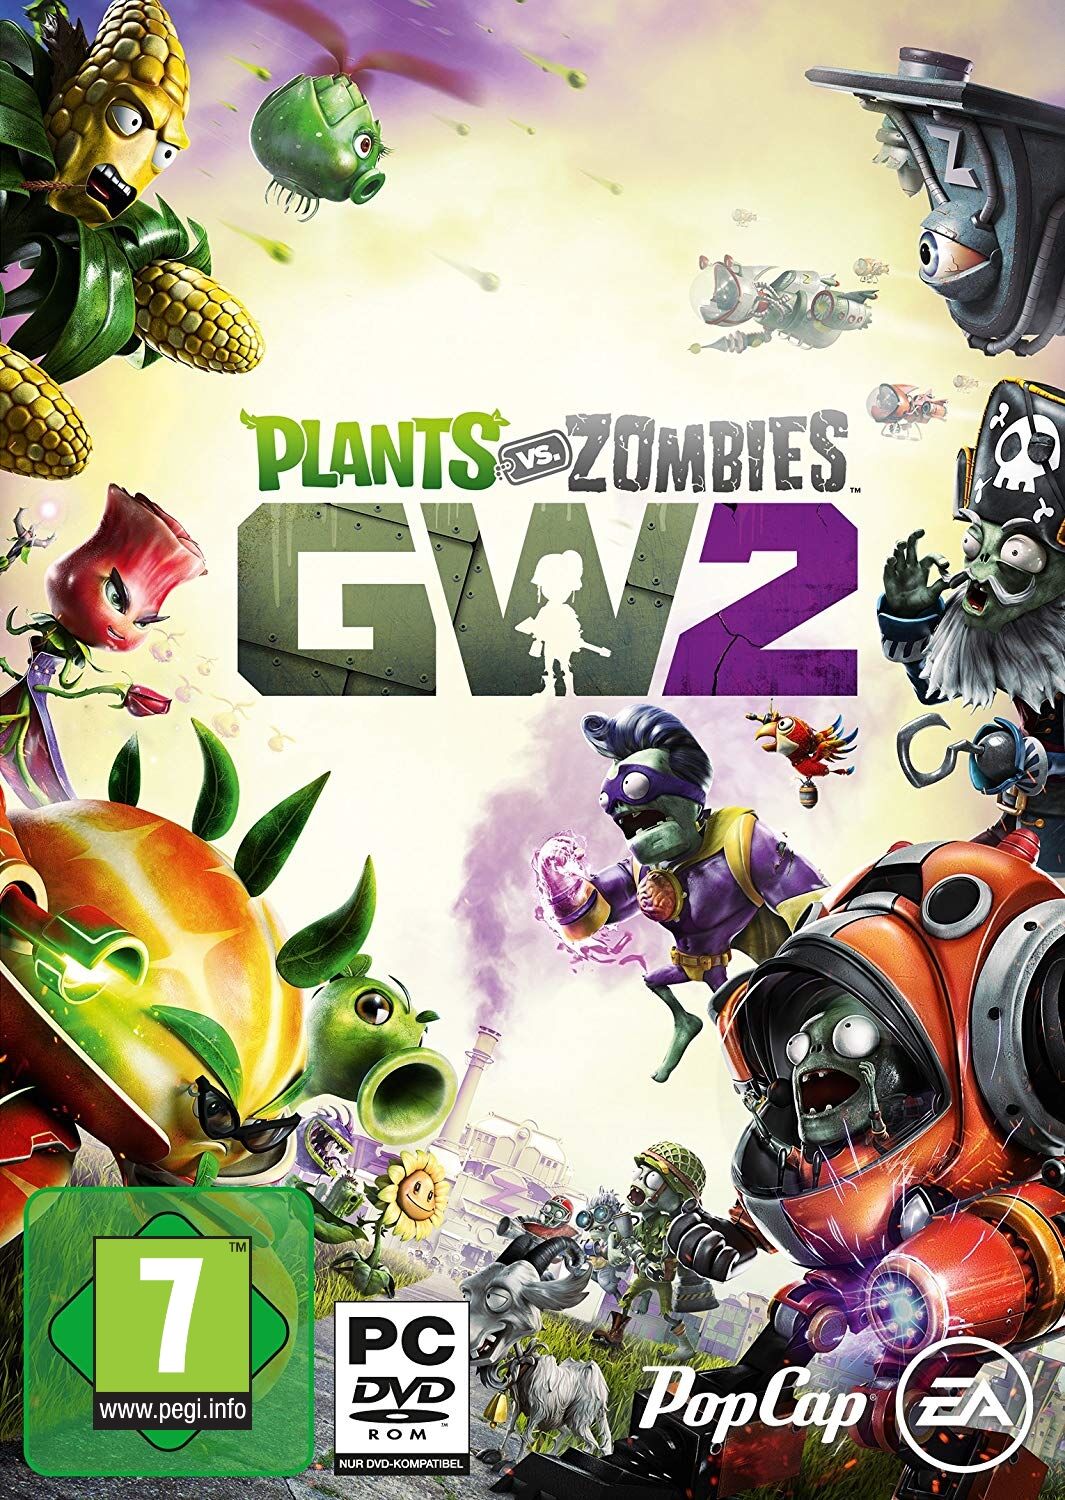 Electronic Arts EA Games - Pyramide: Plants vs. Zombies - Garden Warfare 2 [PC] (D)